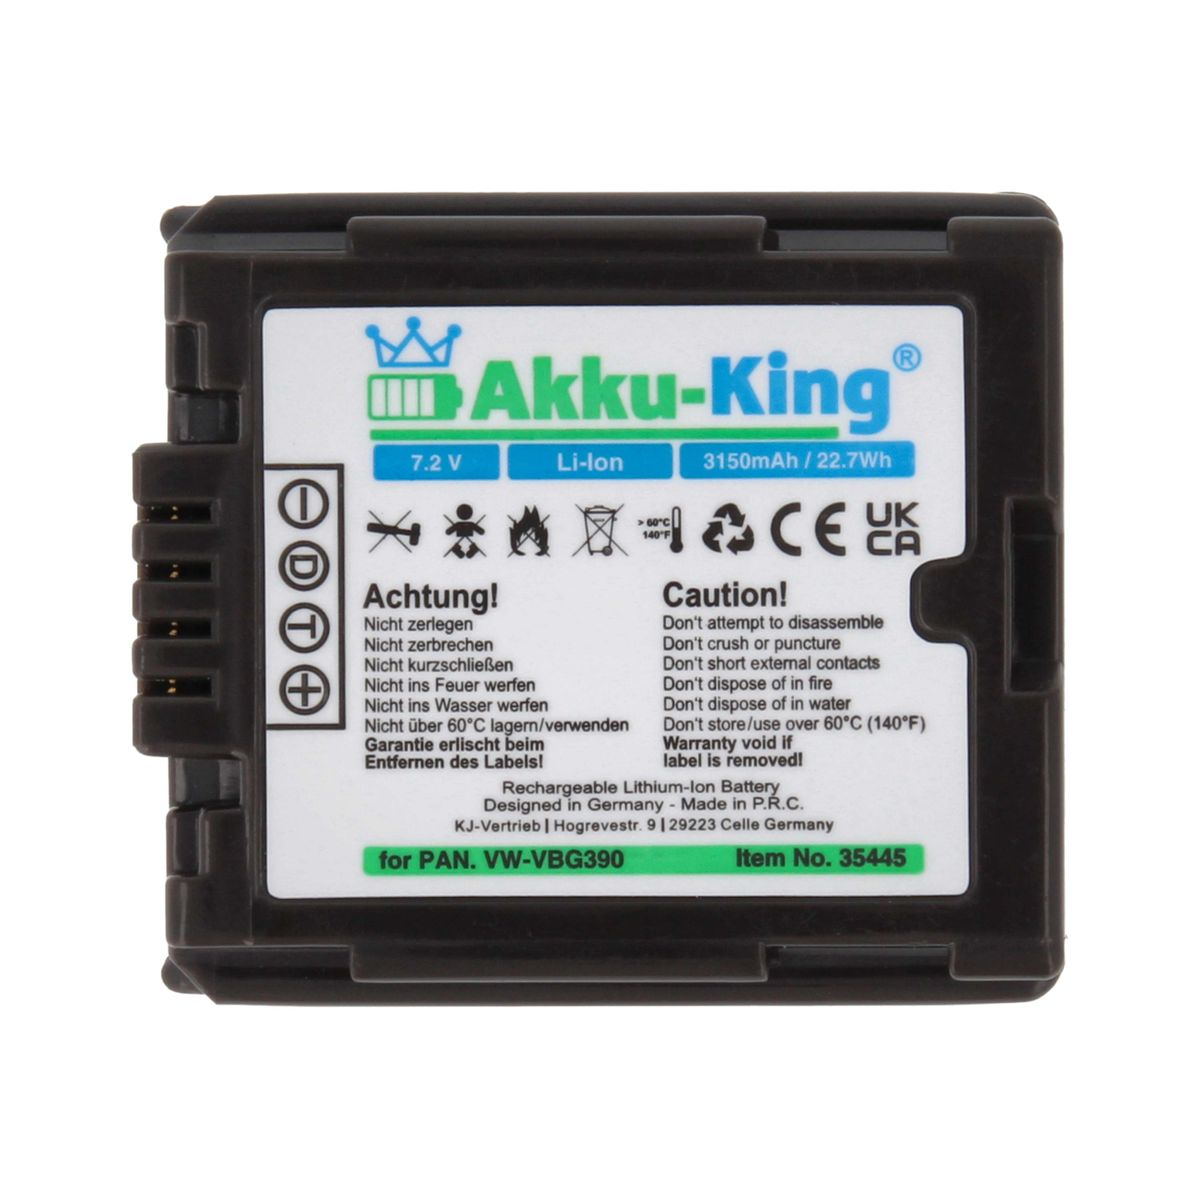 kompatibel Kamera-Akku, Volt, Li-Ion mit 3150mAh AKKU-KING Panasonic 7.4 VW-VBG390PP Akku